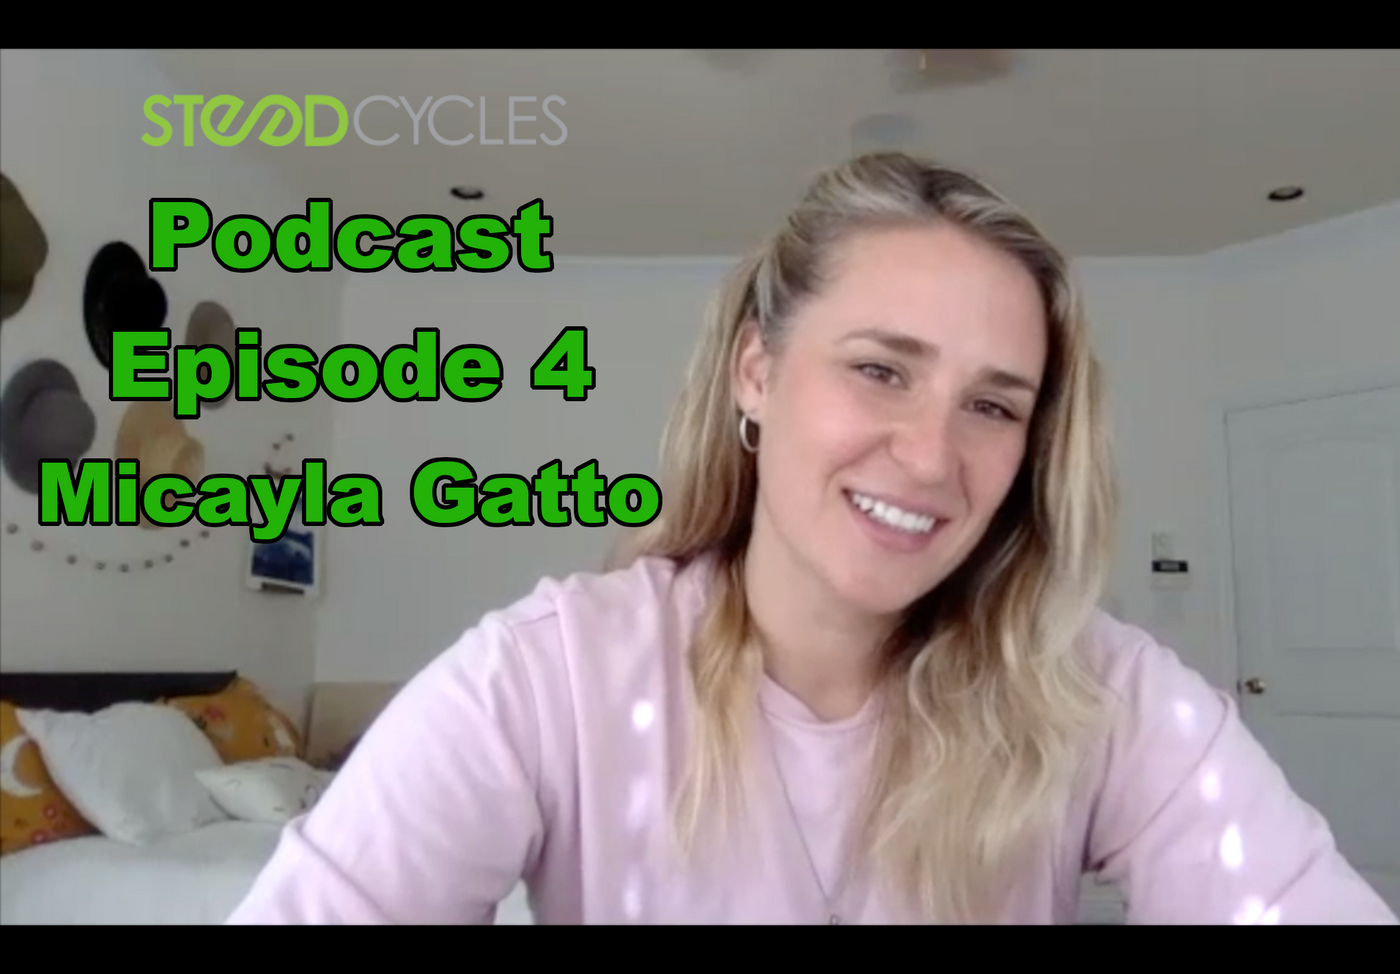 Podcast Episode 4: Micayla Gatto